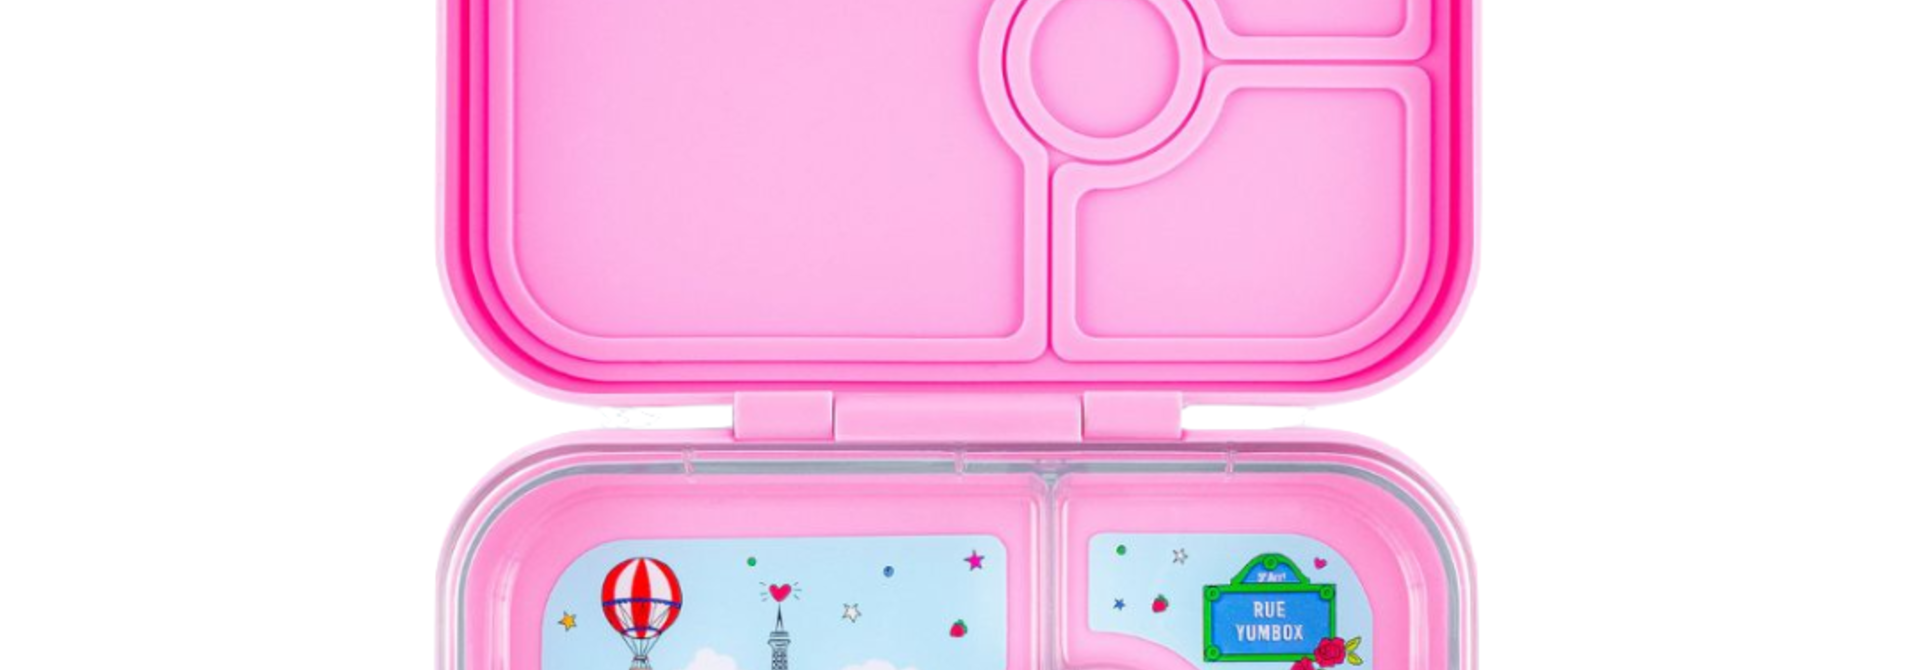 Yumbox Panino - Leakproof Sandwich friendly Bento box - 4-sections - Fifi Pink / Paris je t'aime tray